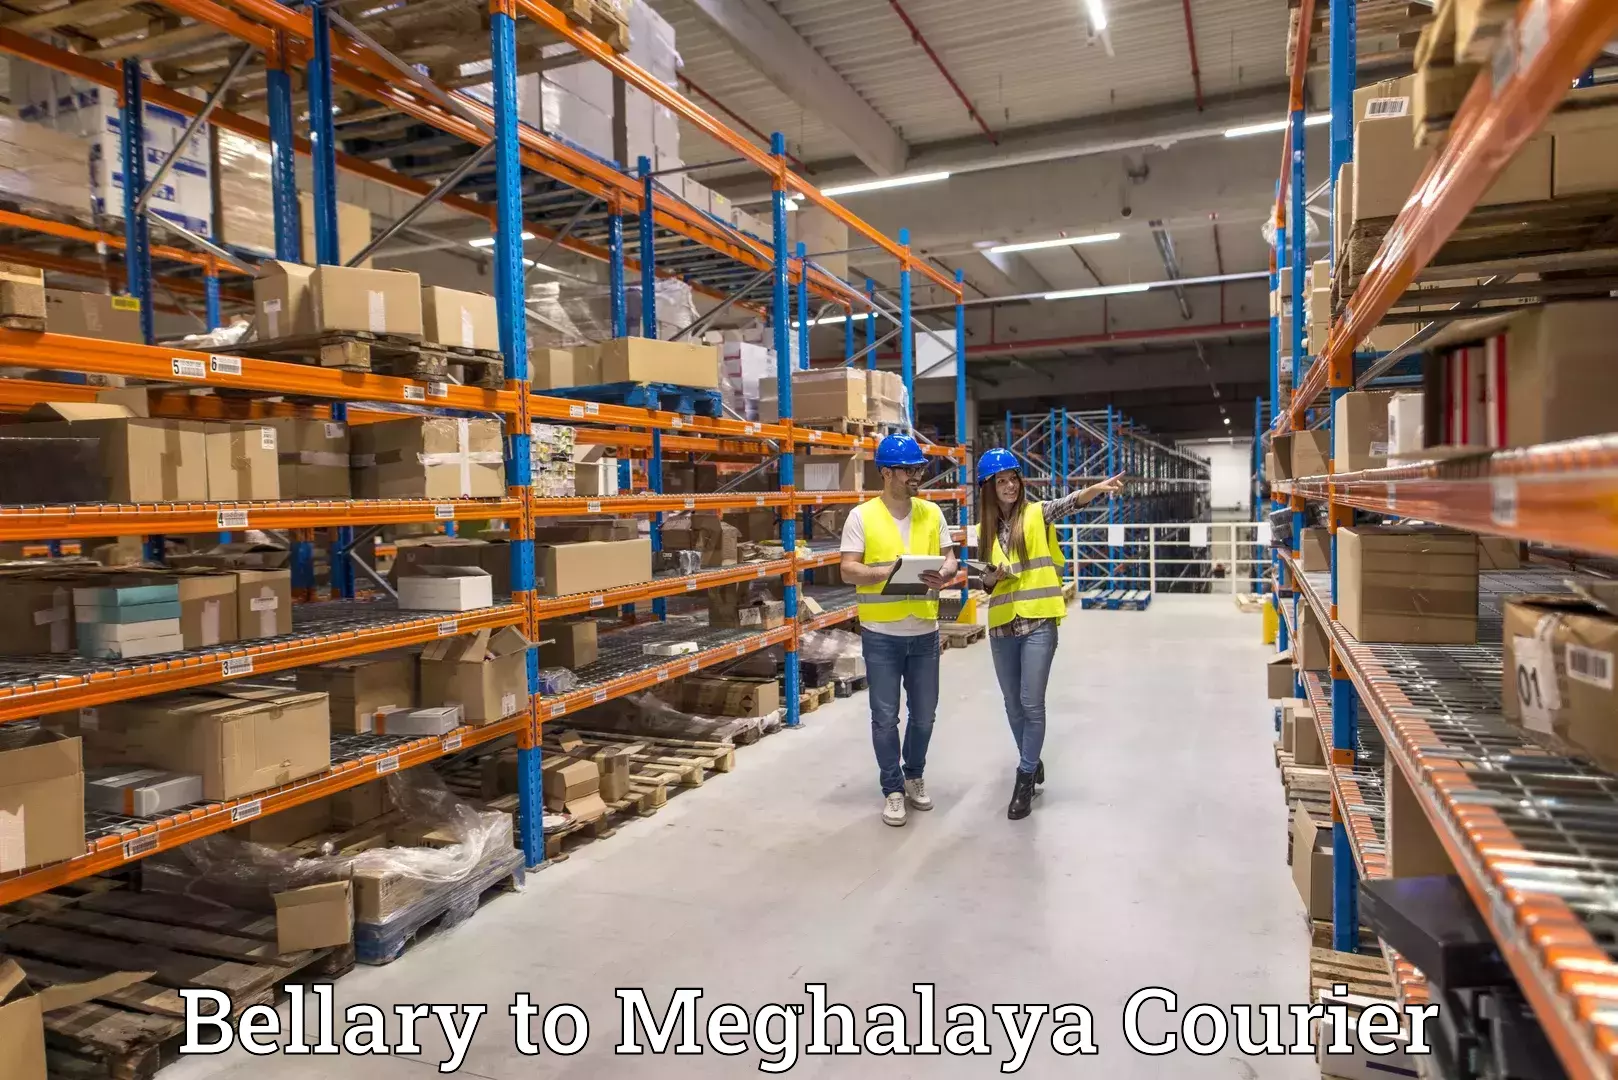 Courier membership in Bellary to East Khasi Hills